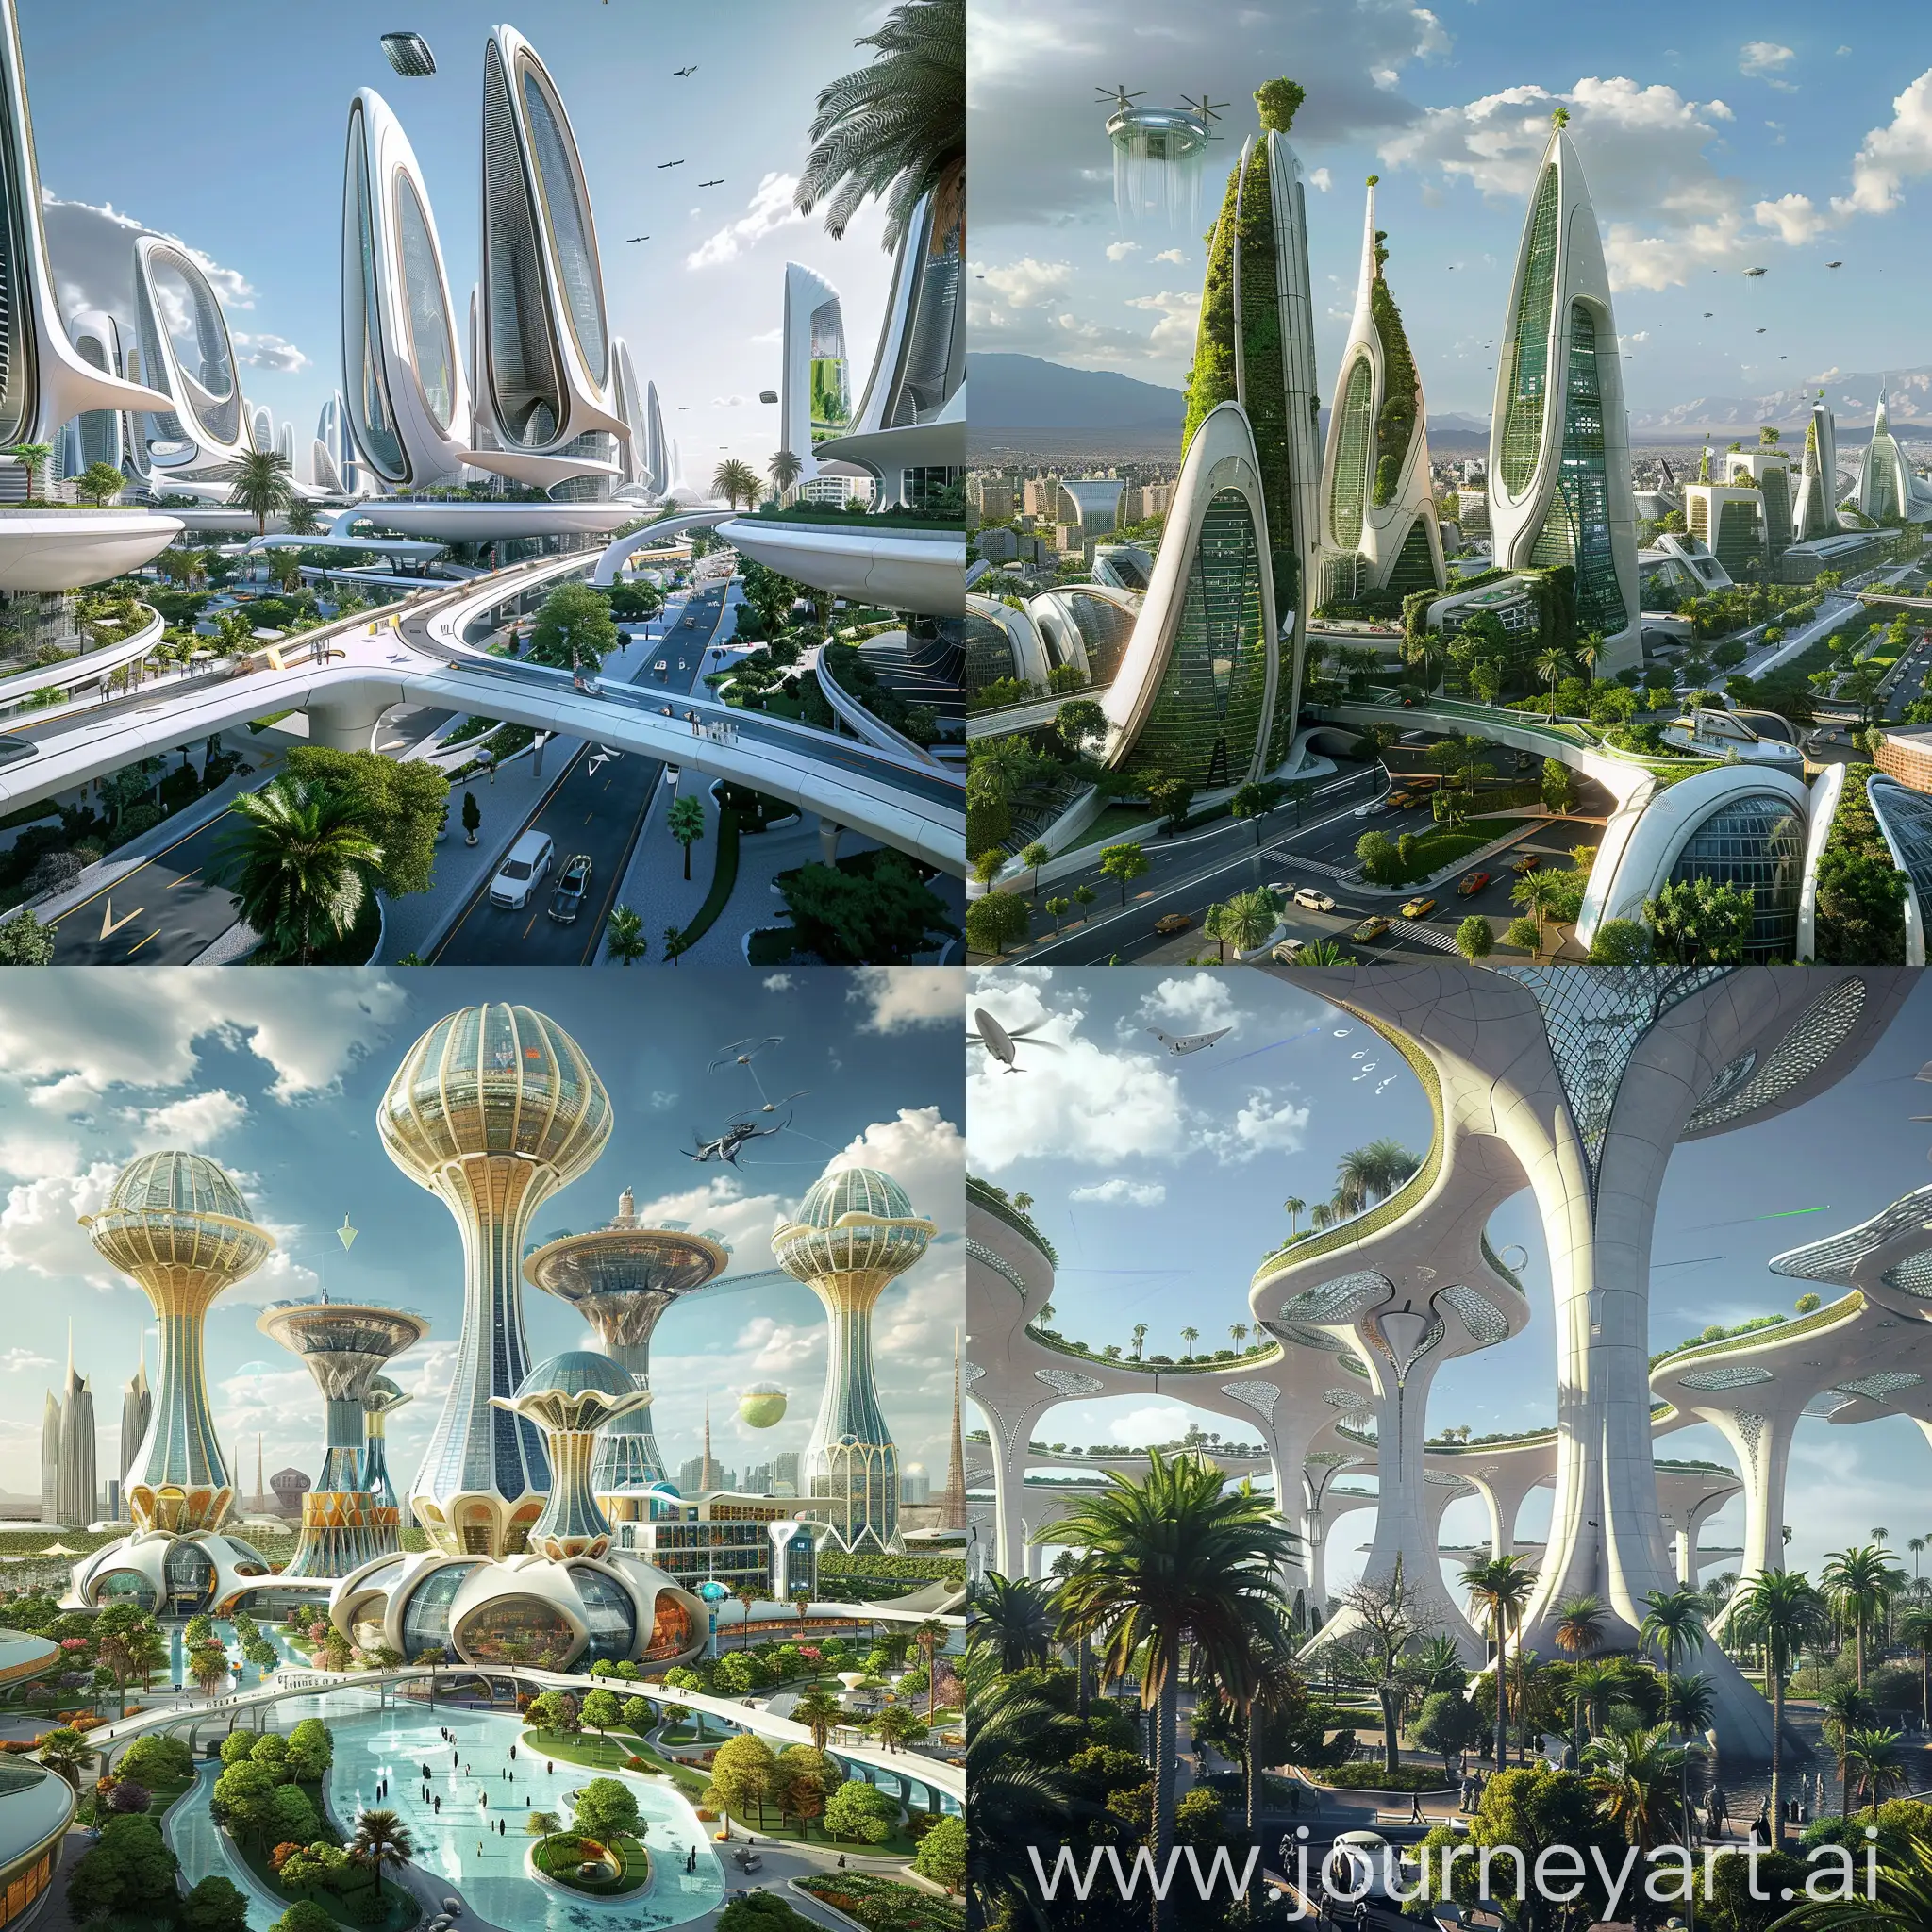 Futuristic-Baghdad-Smart-Grids-Vertical-Farms-AIManaged-Healthcare